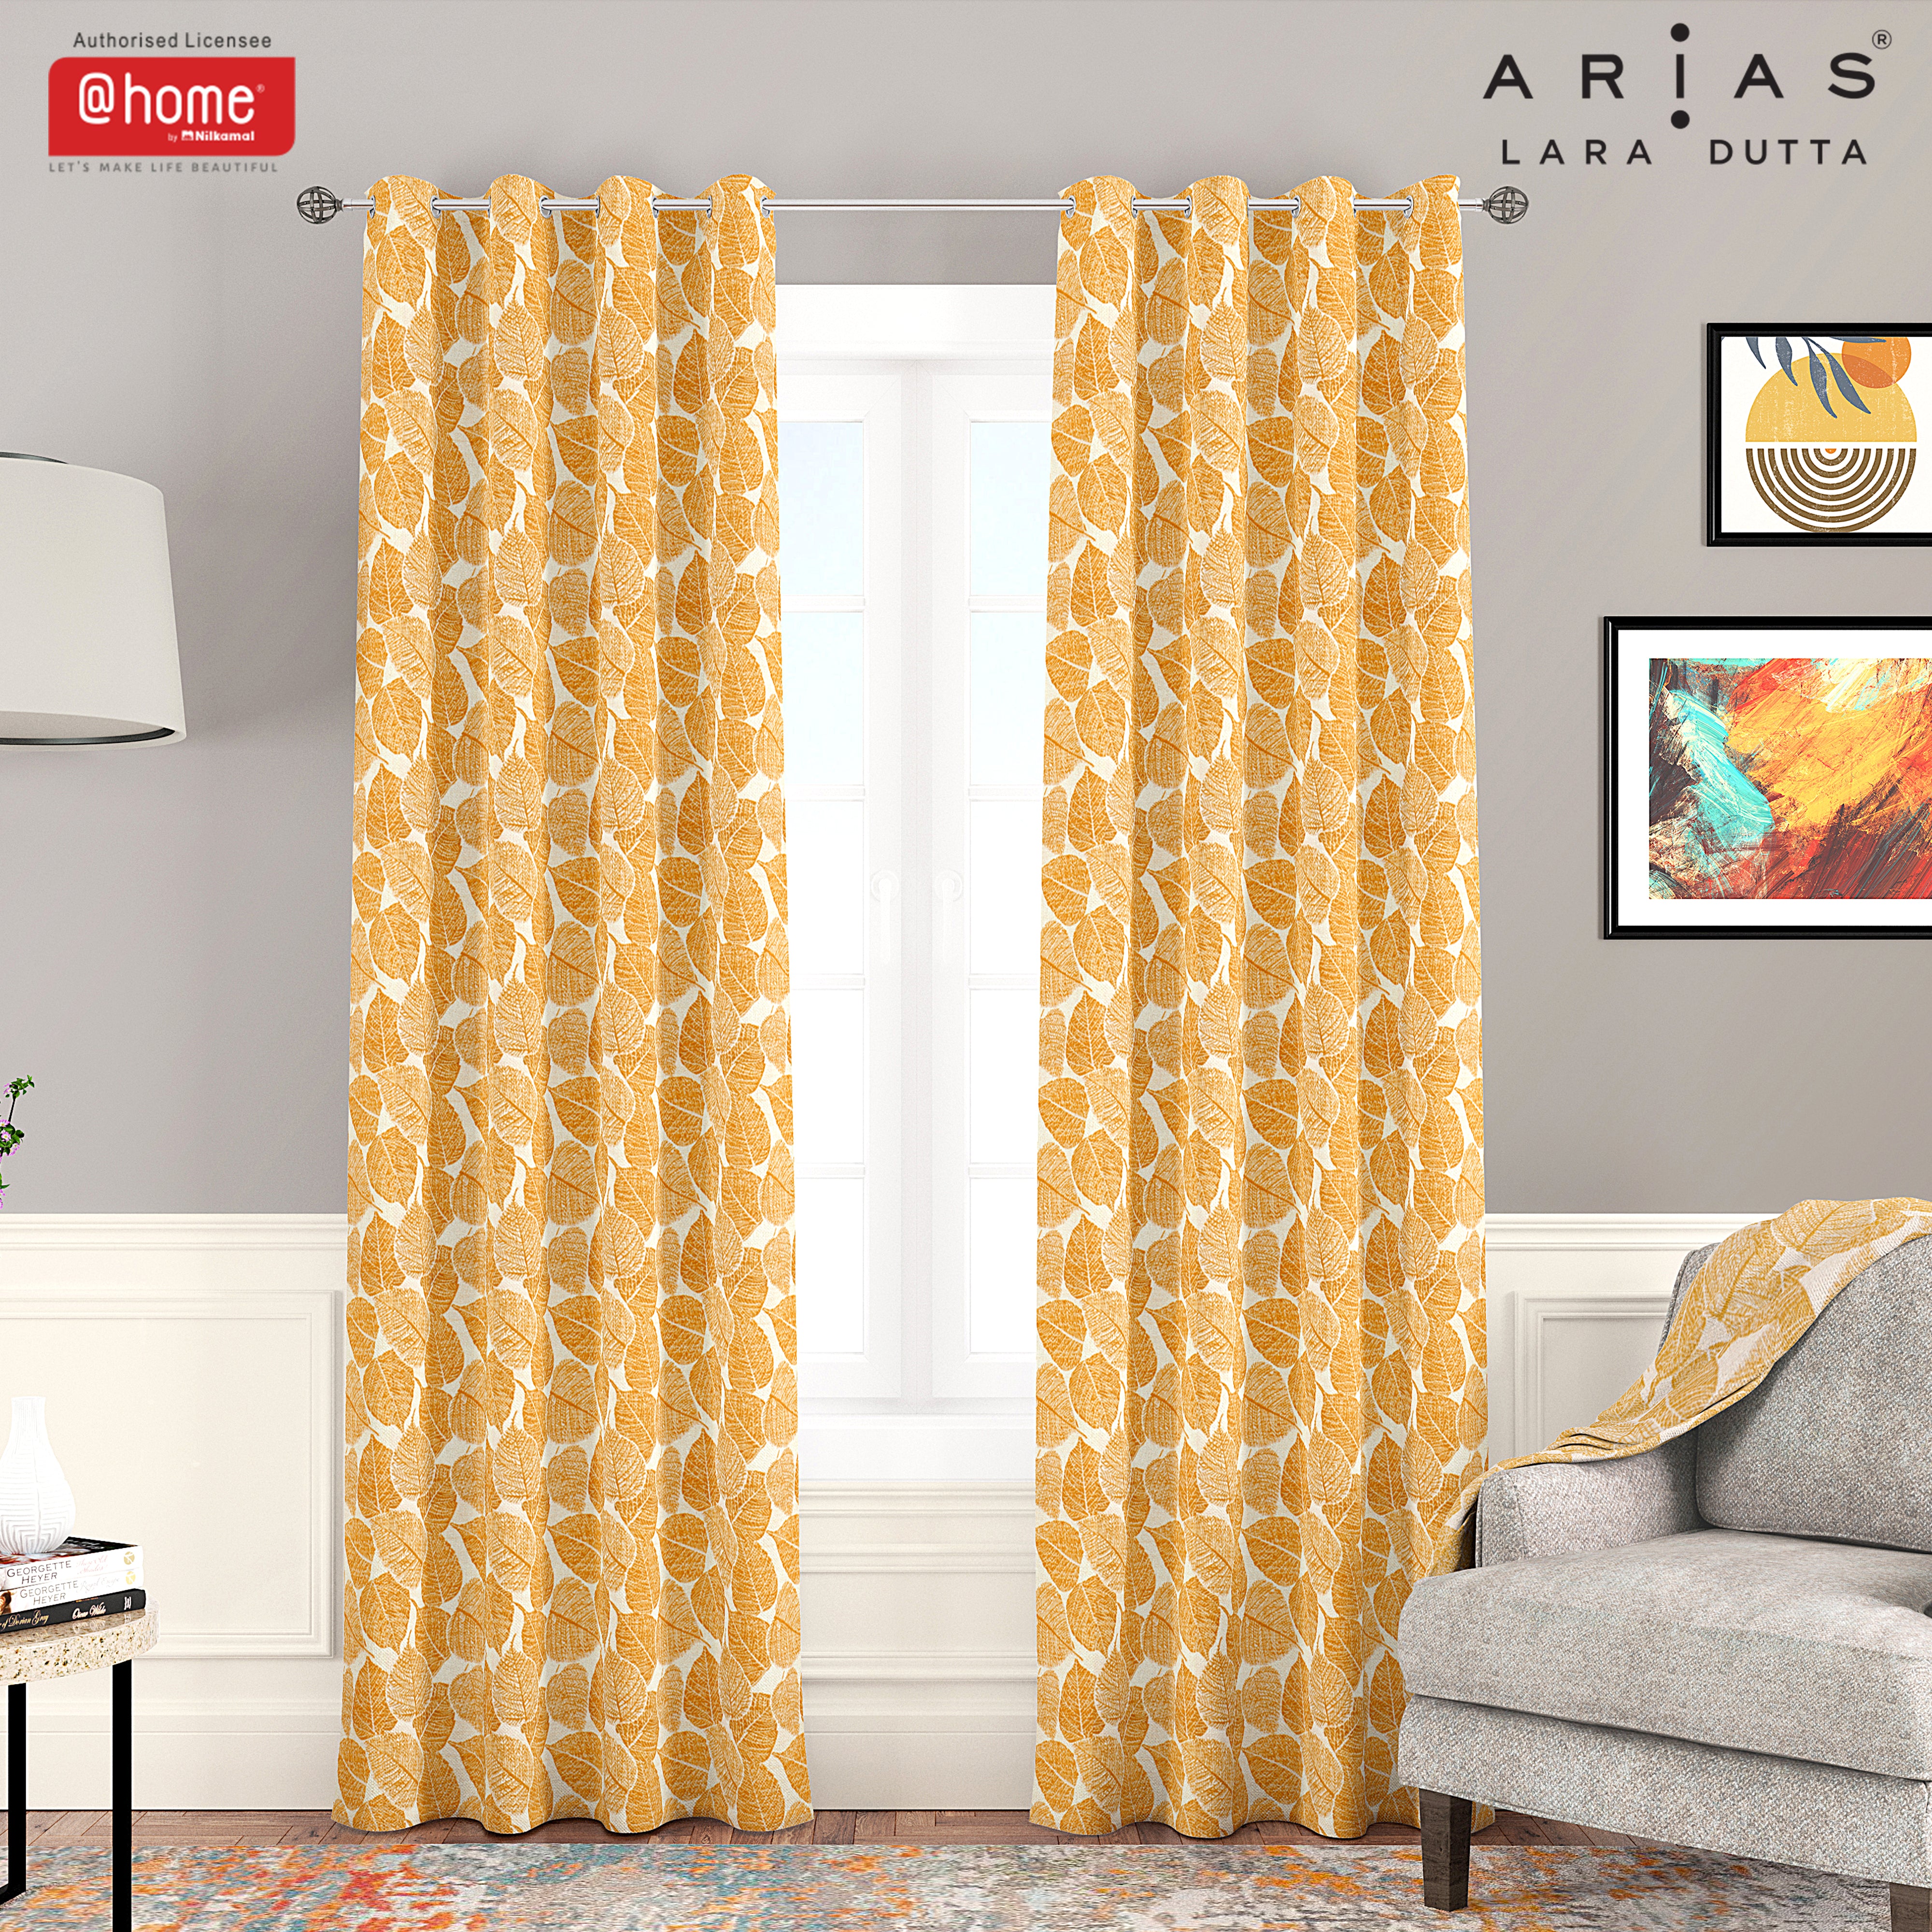 Arias by Lara Dutta Luxuria Jacquard Leaf 7 Ft Polyester Door Curtain Set of 2 (Mustard)